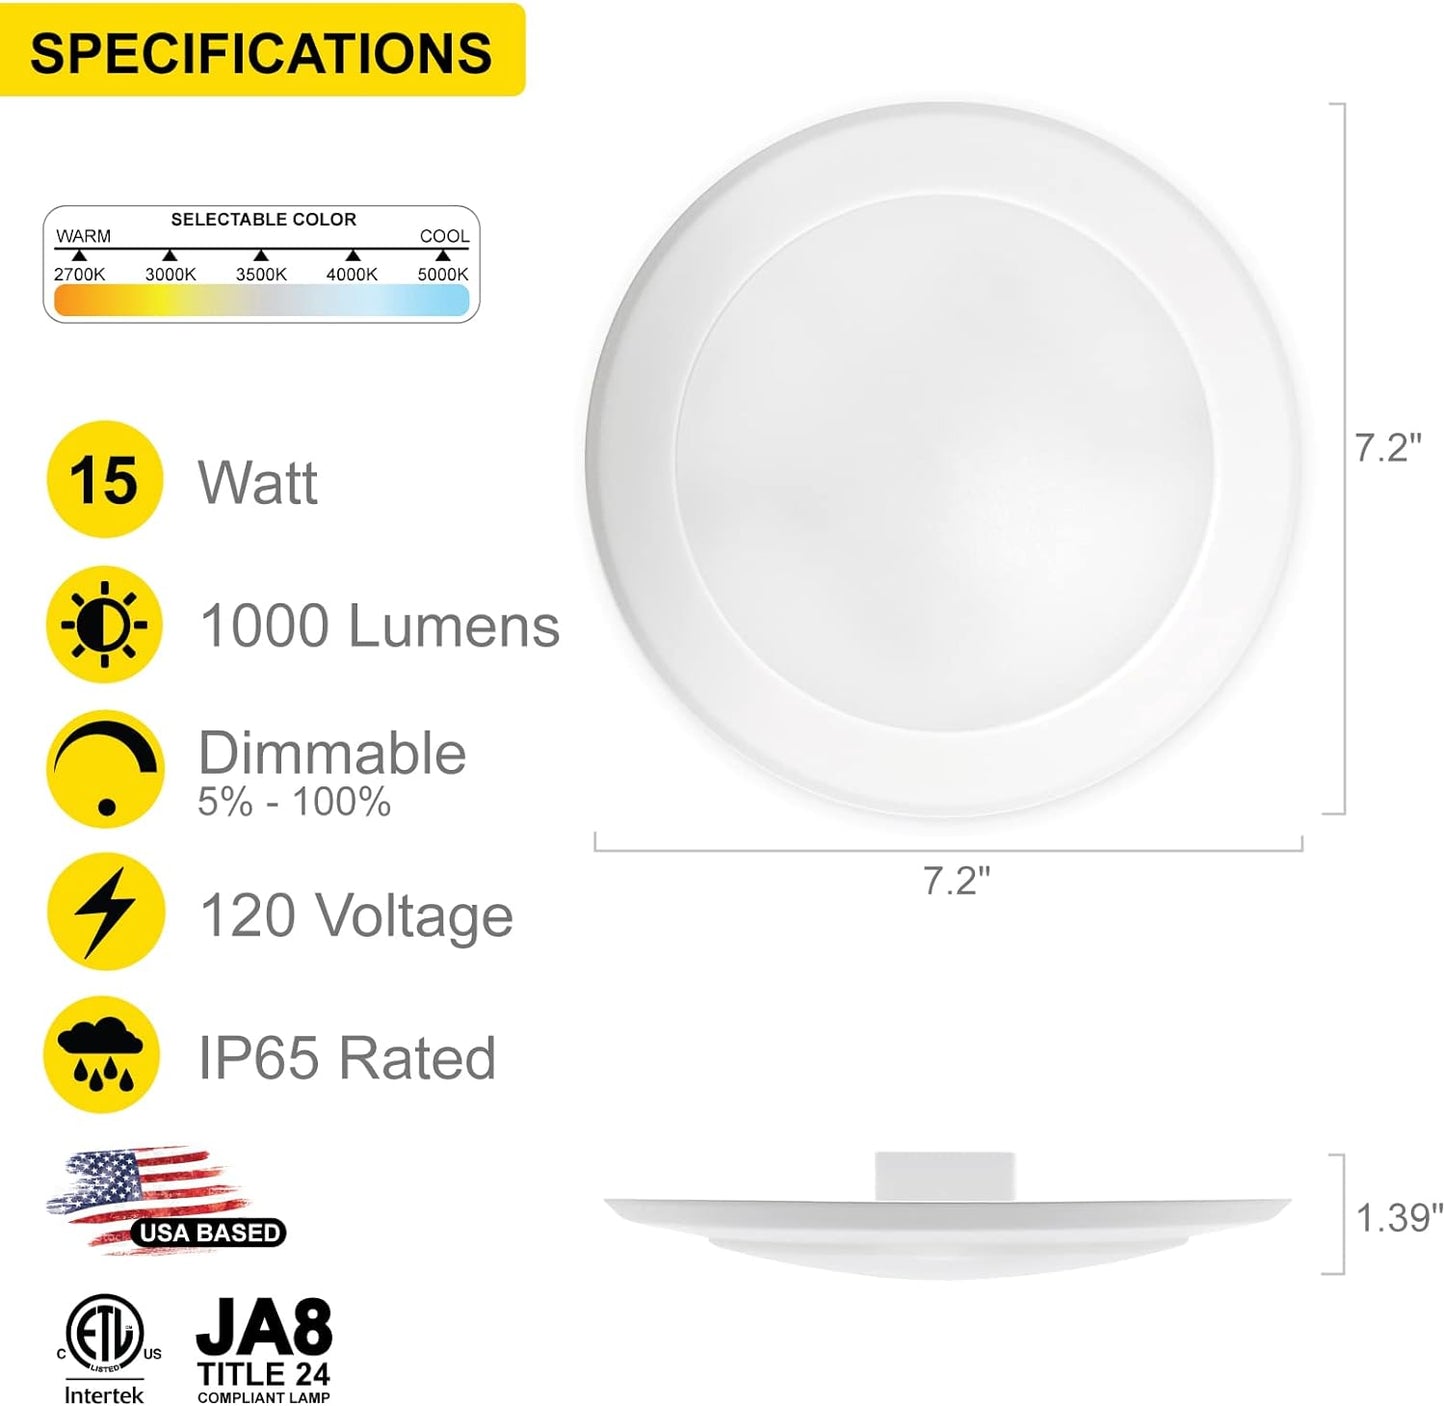 NUWATT 5/6 Slim LED Flush Mount Disk Downlight 24 Pack, 15W, 5CCT, Dimmable LED Ceiling Light, Retrofit Recessed LED & 30/40 J Box